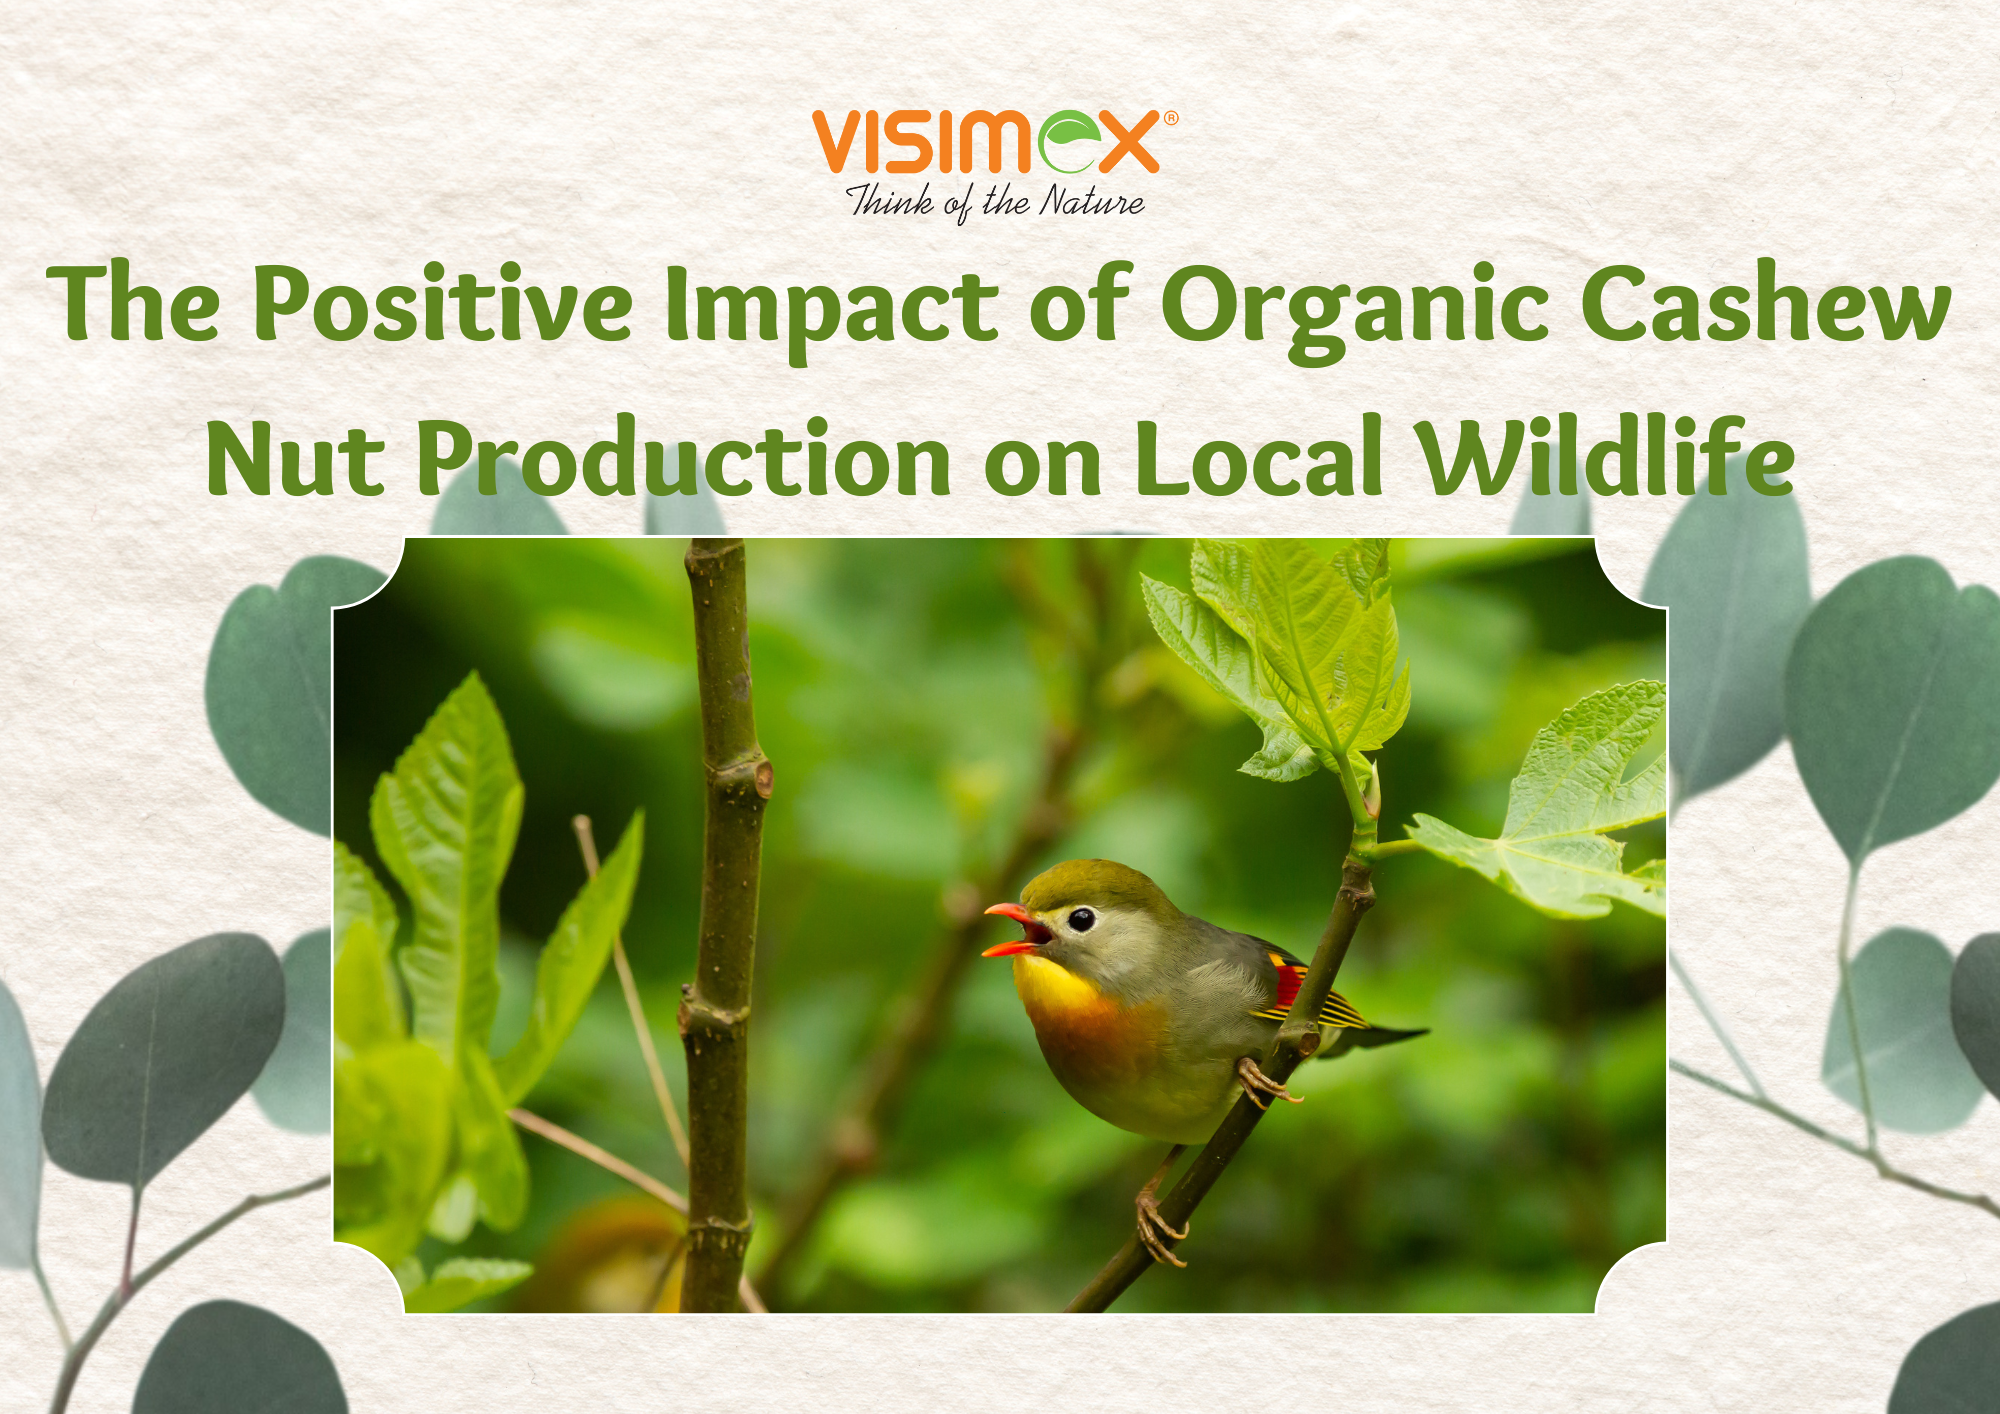 Organic Cashew Kernels and Wildlife Conservation